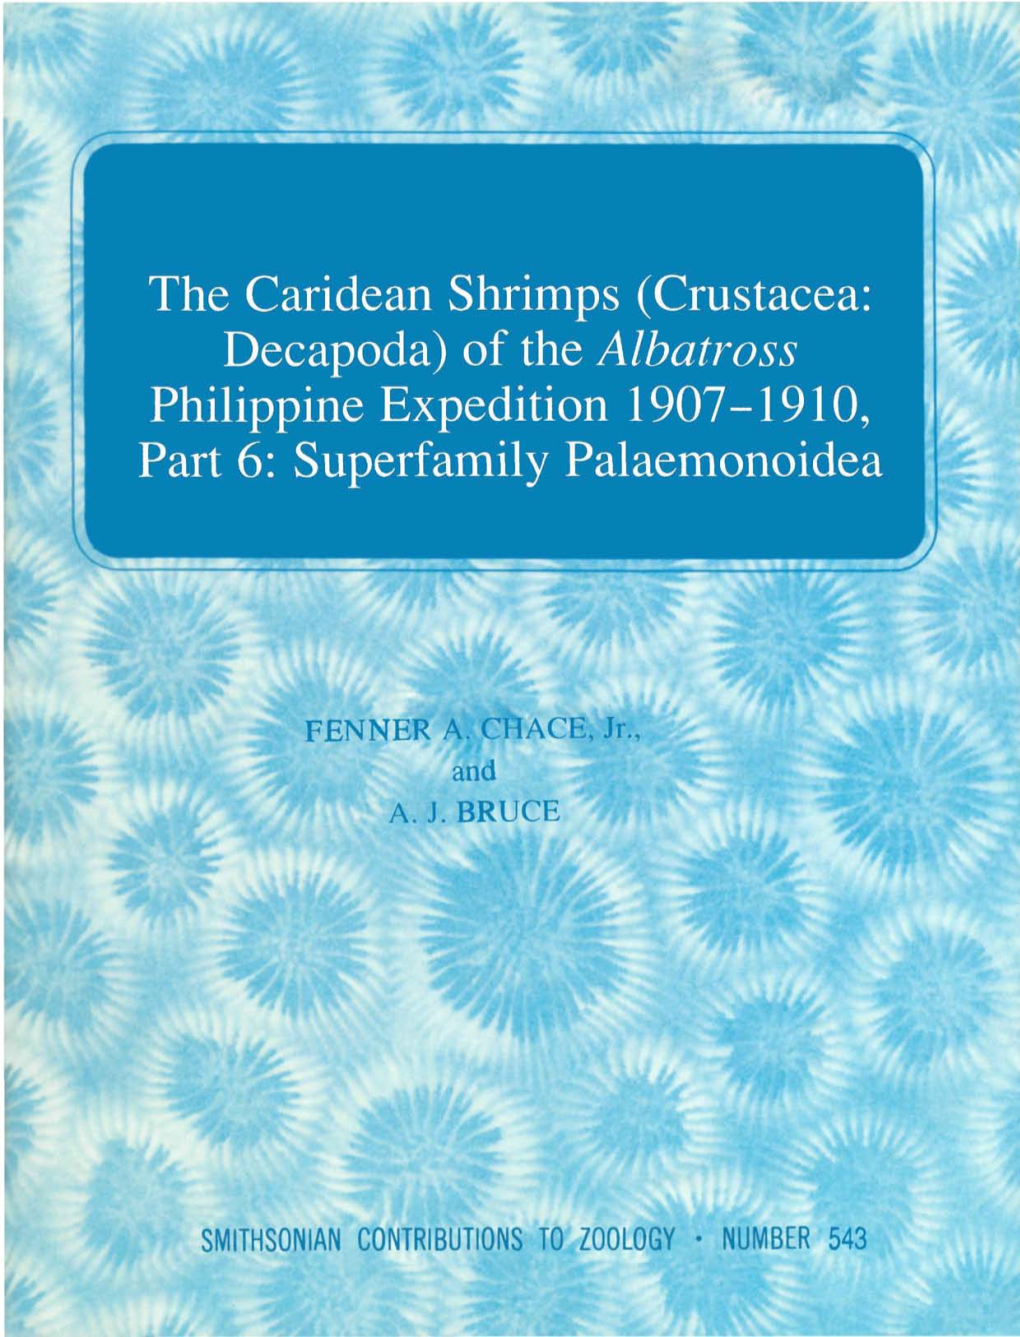 The Caridean Shrimps (Crustacea: Decapoda) of the Albatross Philippine Expedition 1907-1910, Part 6: Superfamily Palaemonoidea